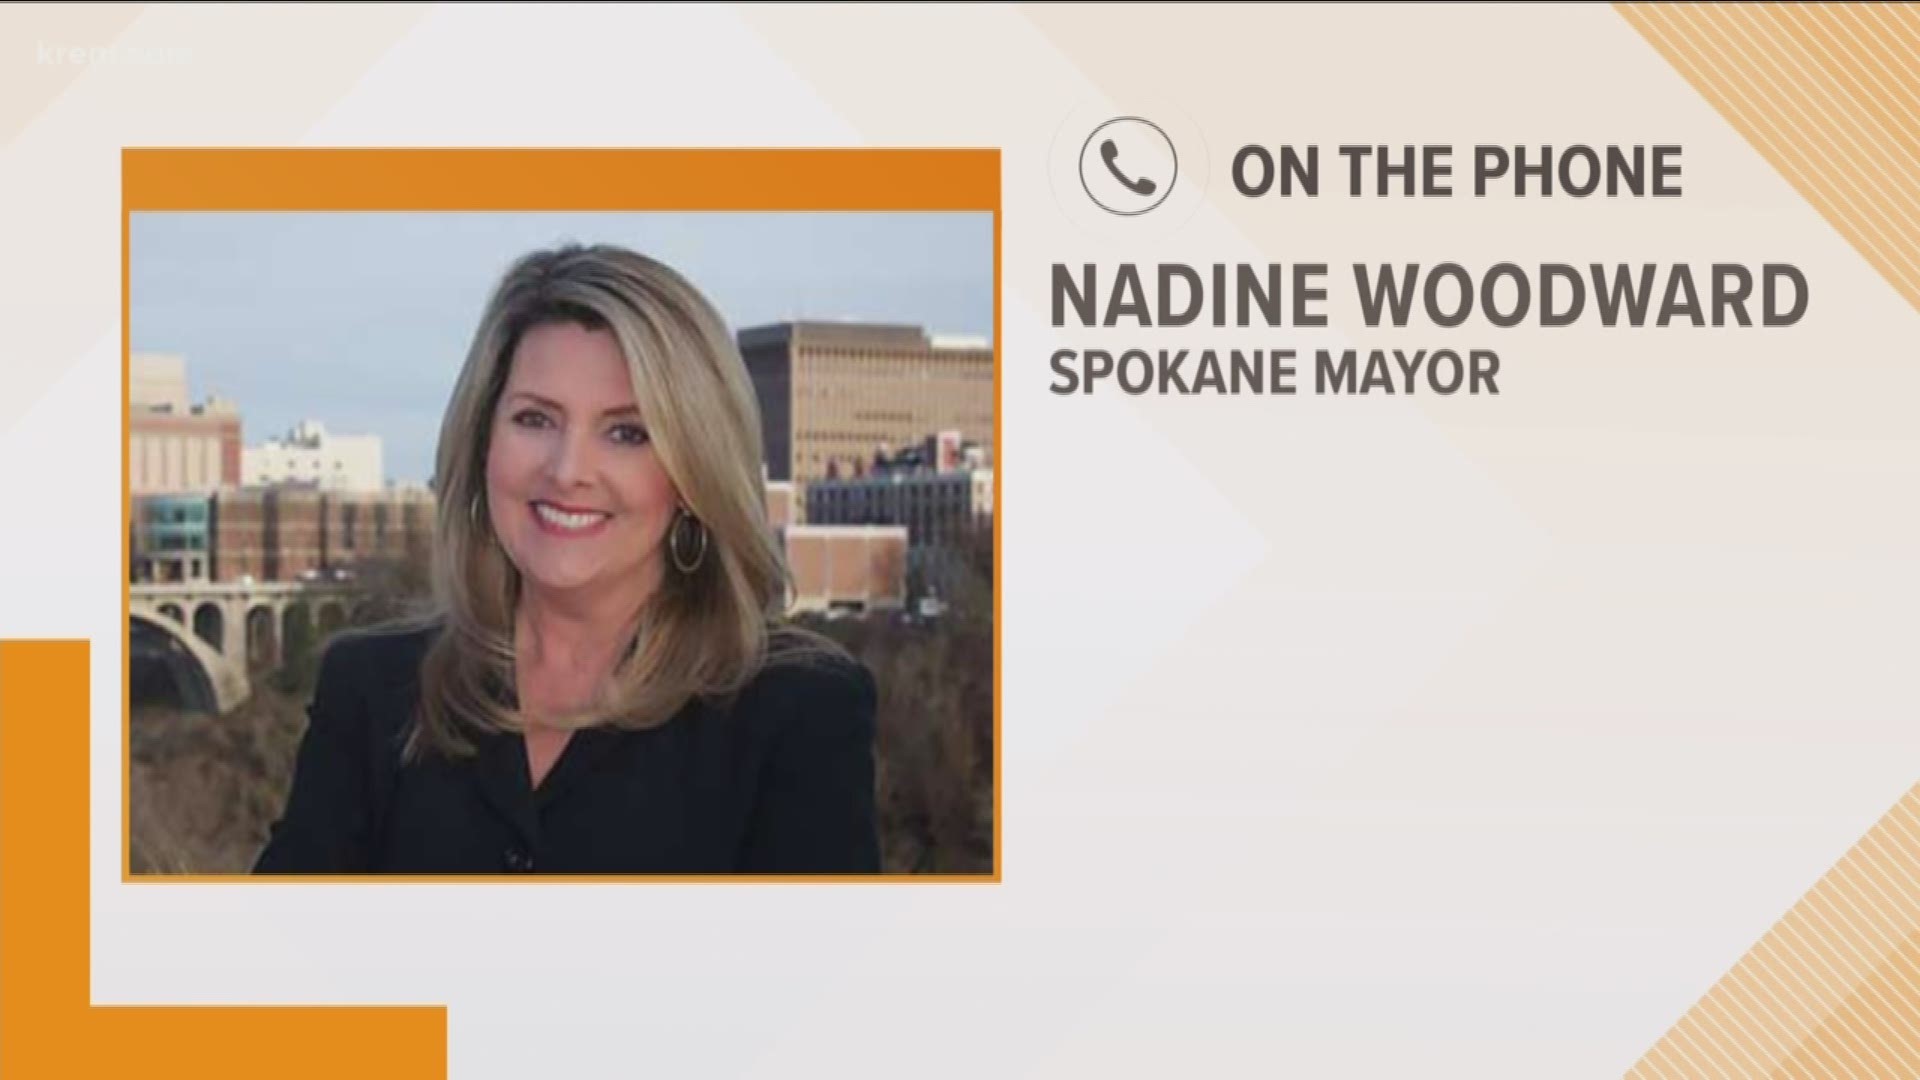 Spokane Mayor Nadine Woodward says she'd give Spokane a B+ on following health protocols while out patronizing businesses.